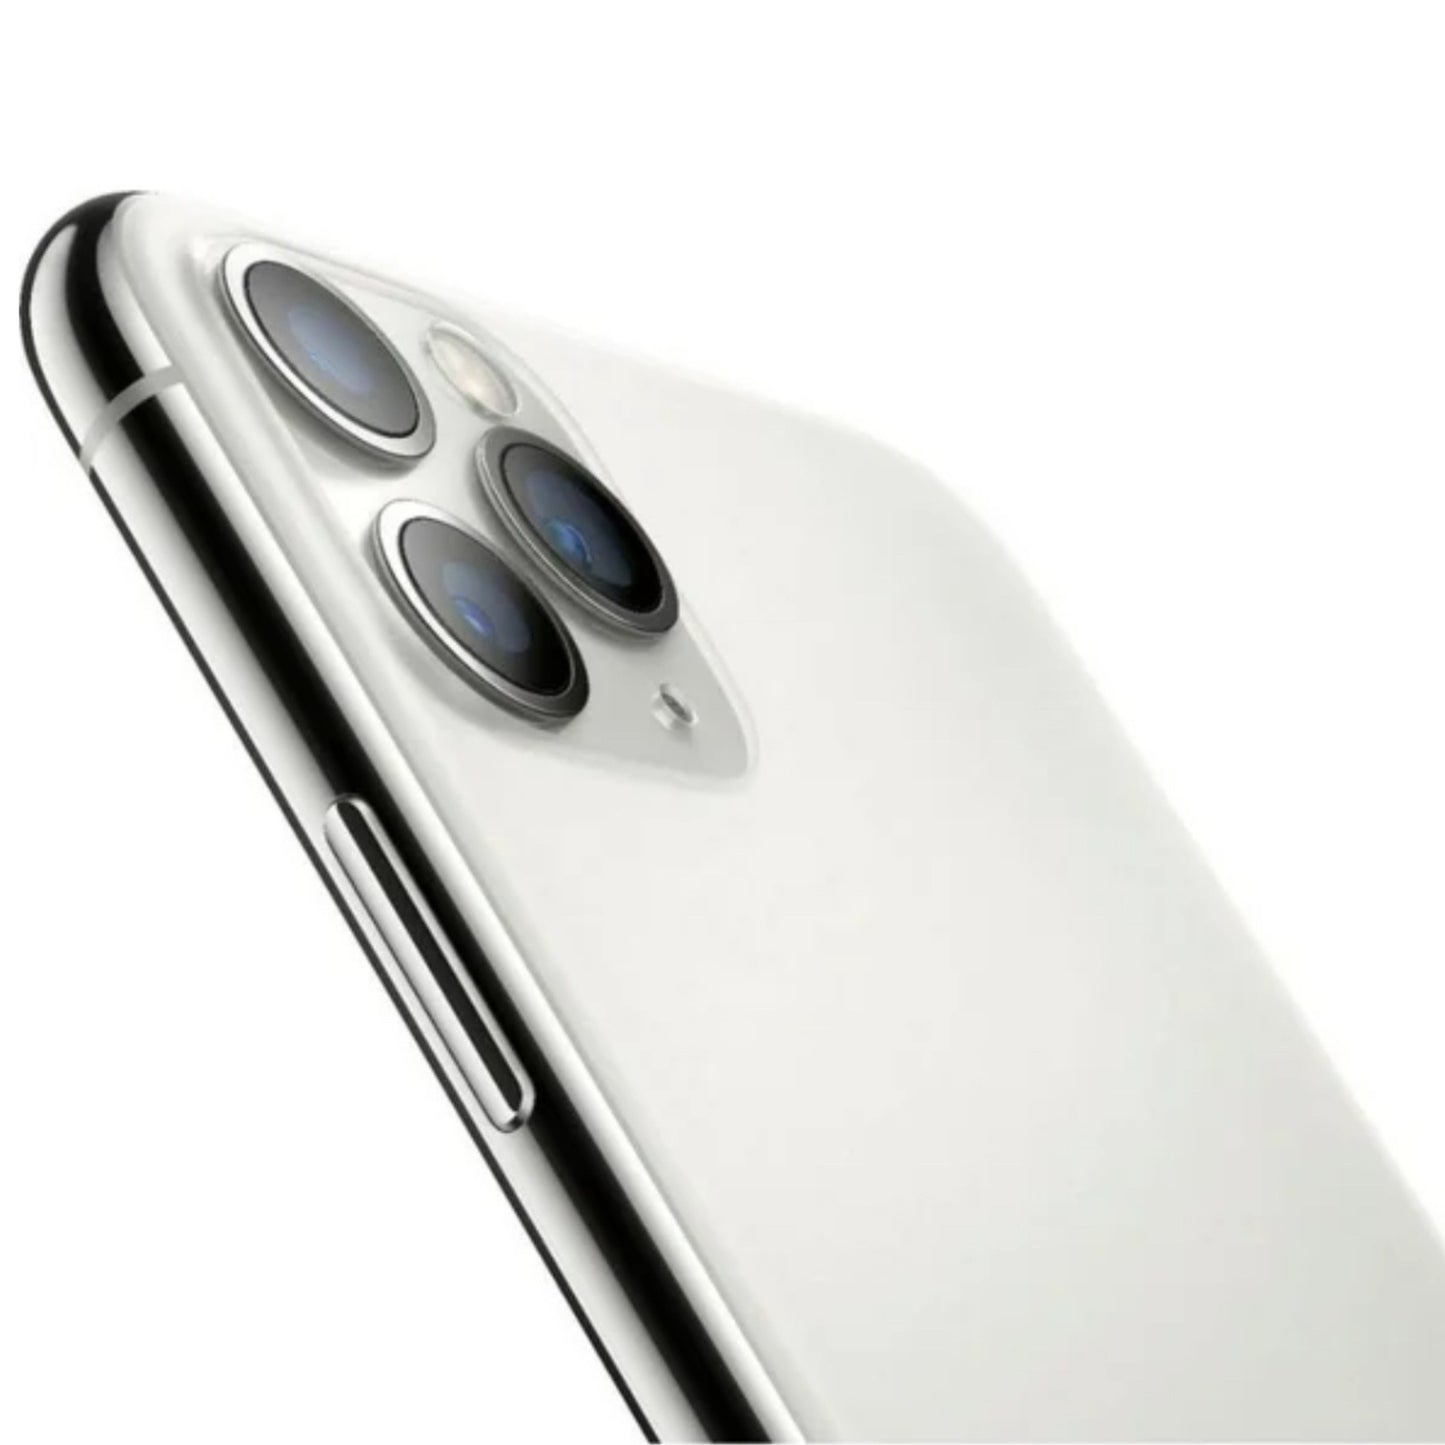 iPhone 11 Pro Max Plata 256 GB (Desbloqueado) Usado